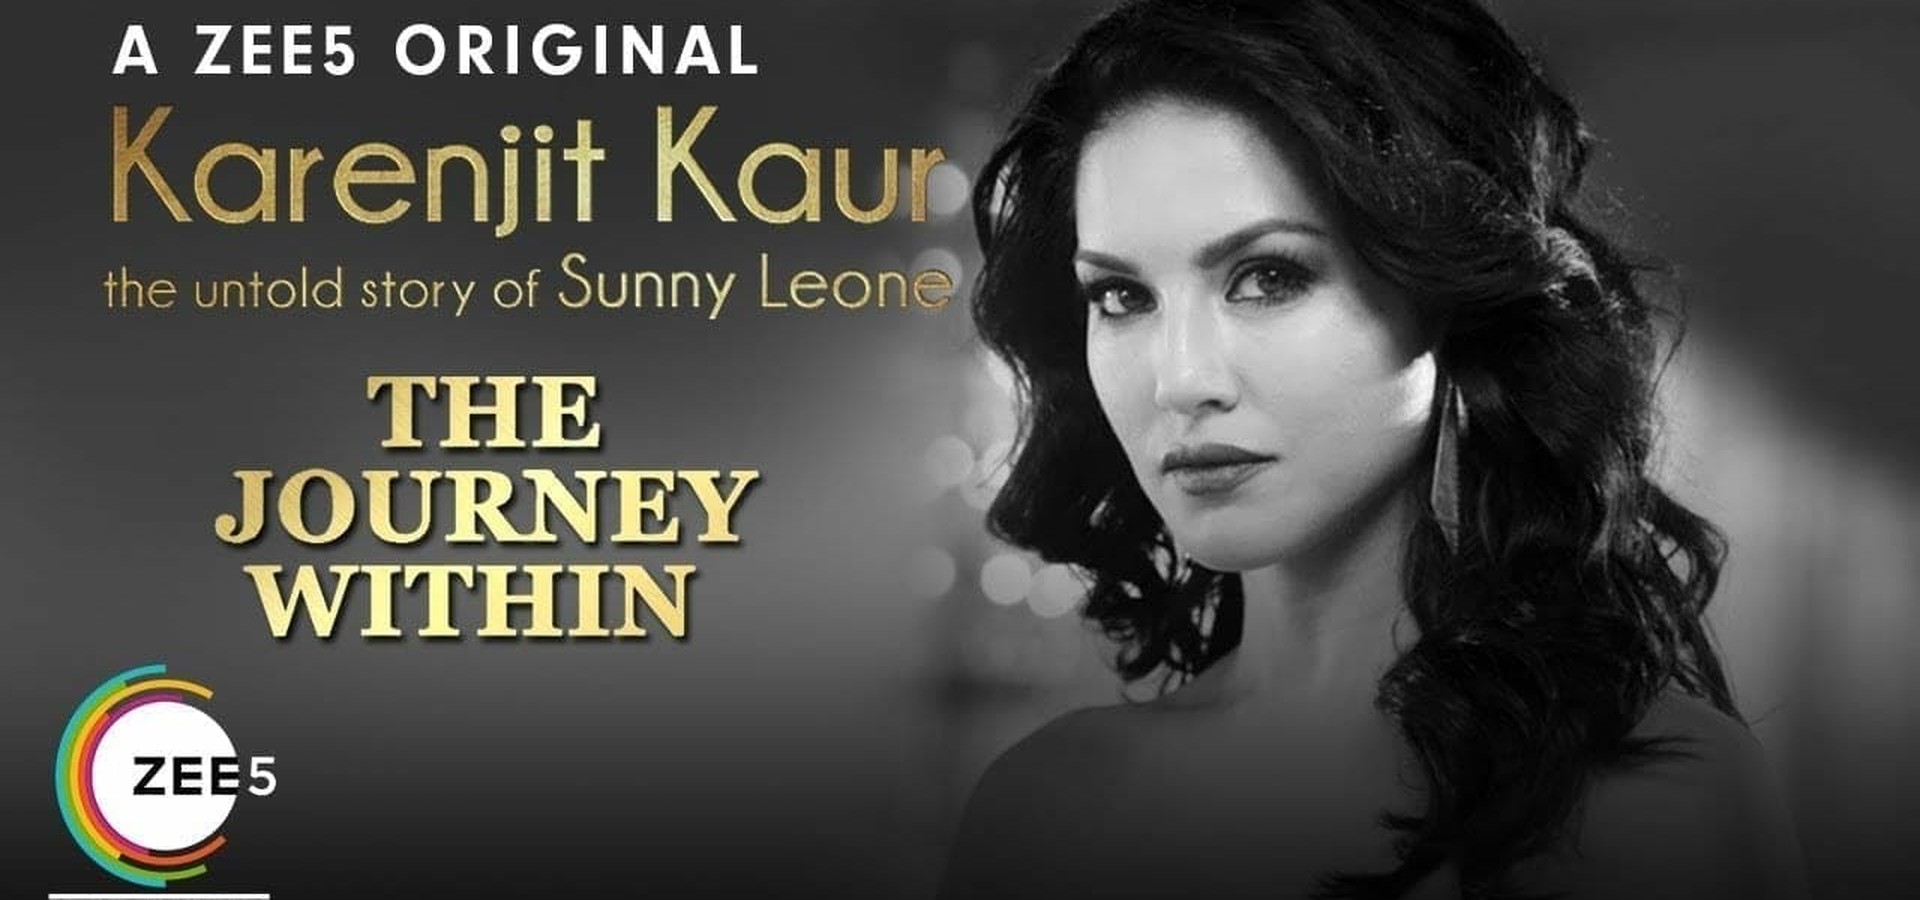 Karenjit Kaur The Untold Story Of Sunny Leone Season 1 Streaming